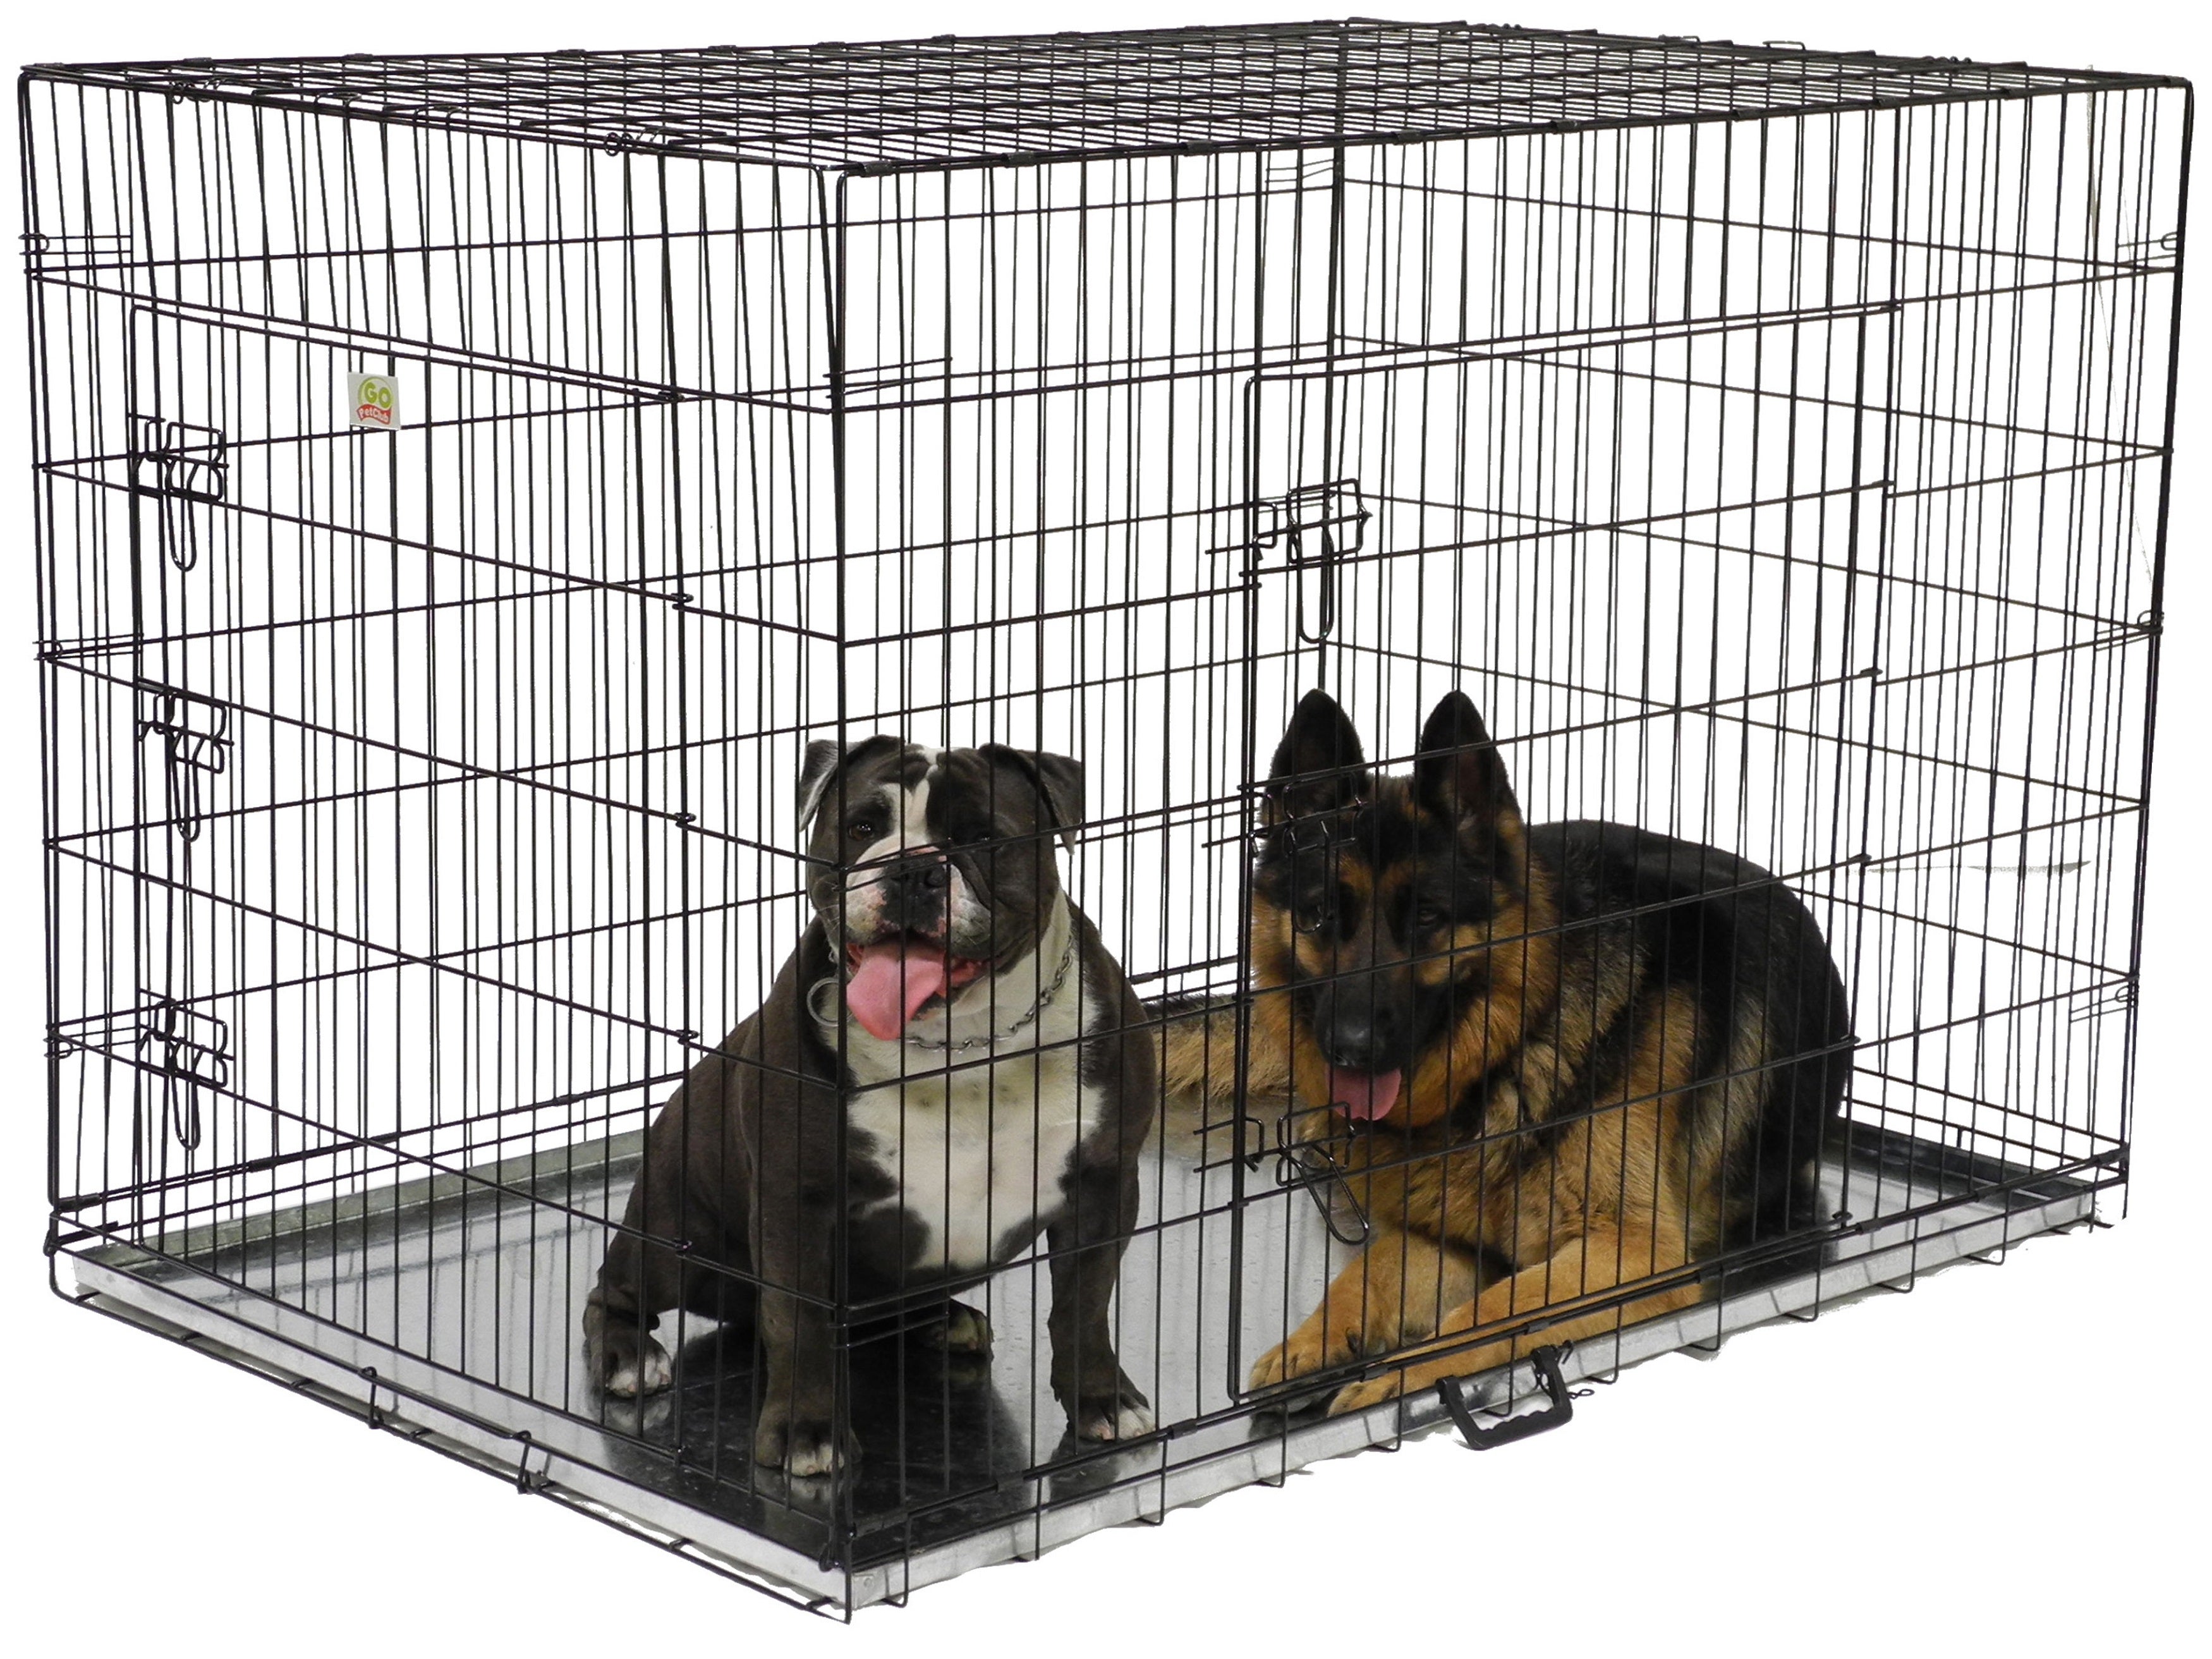 72 inch dog crate